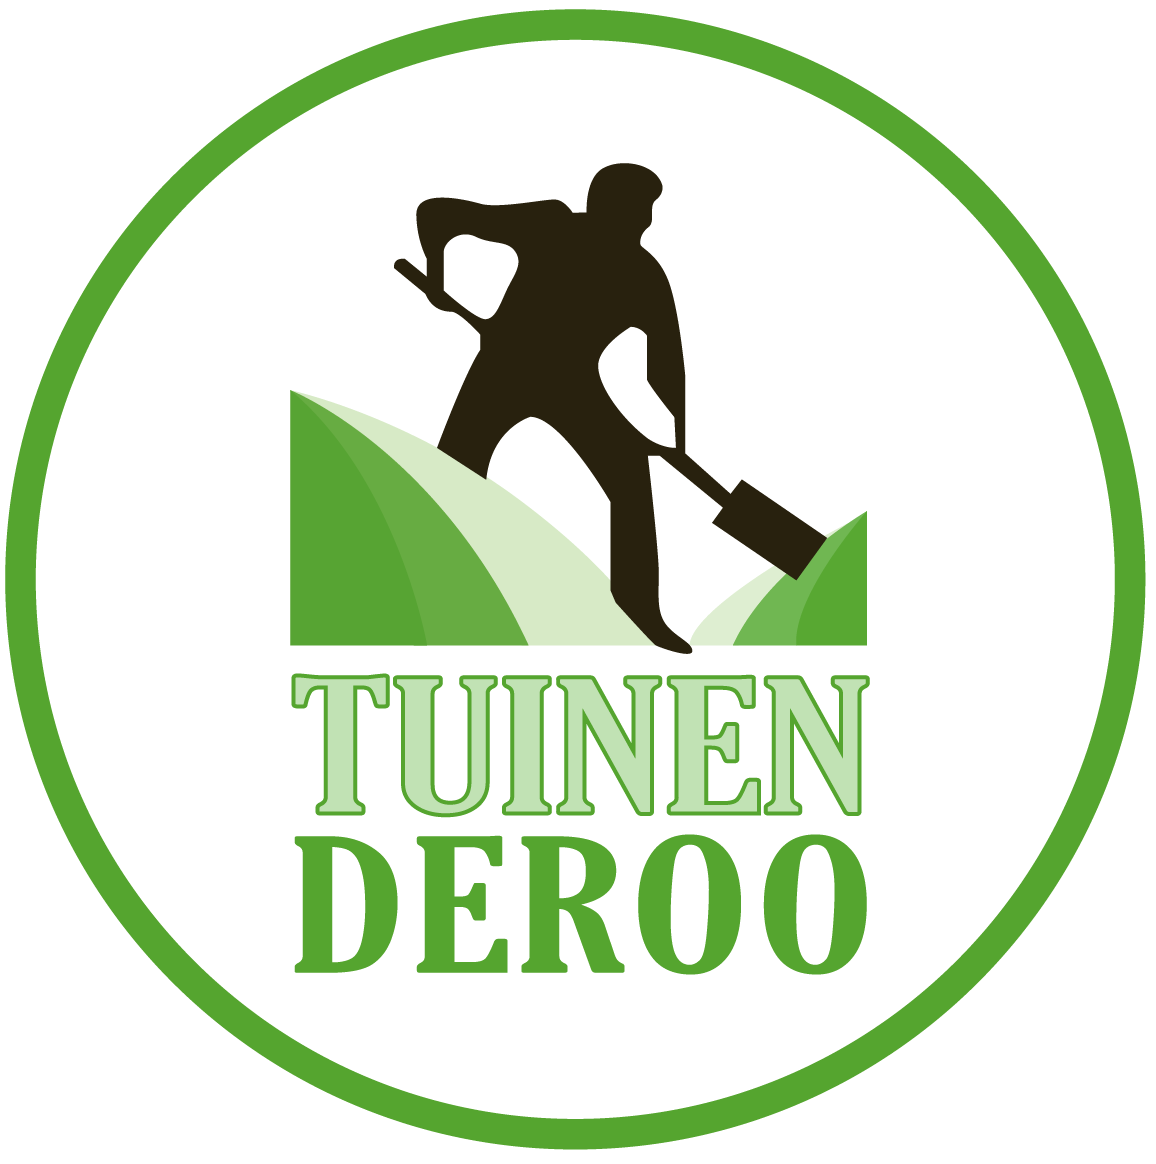 cropped logo Tuinen Deroo